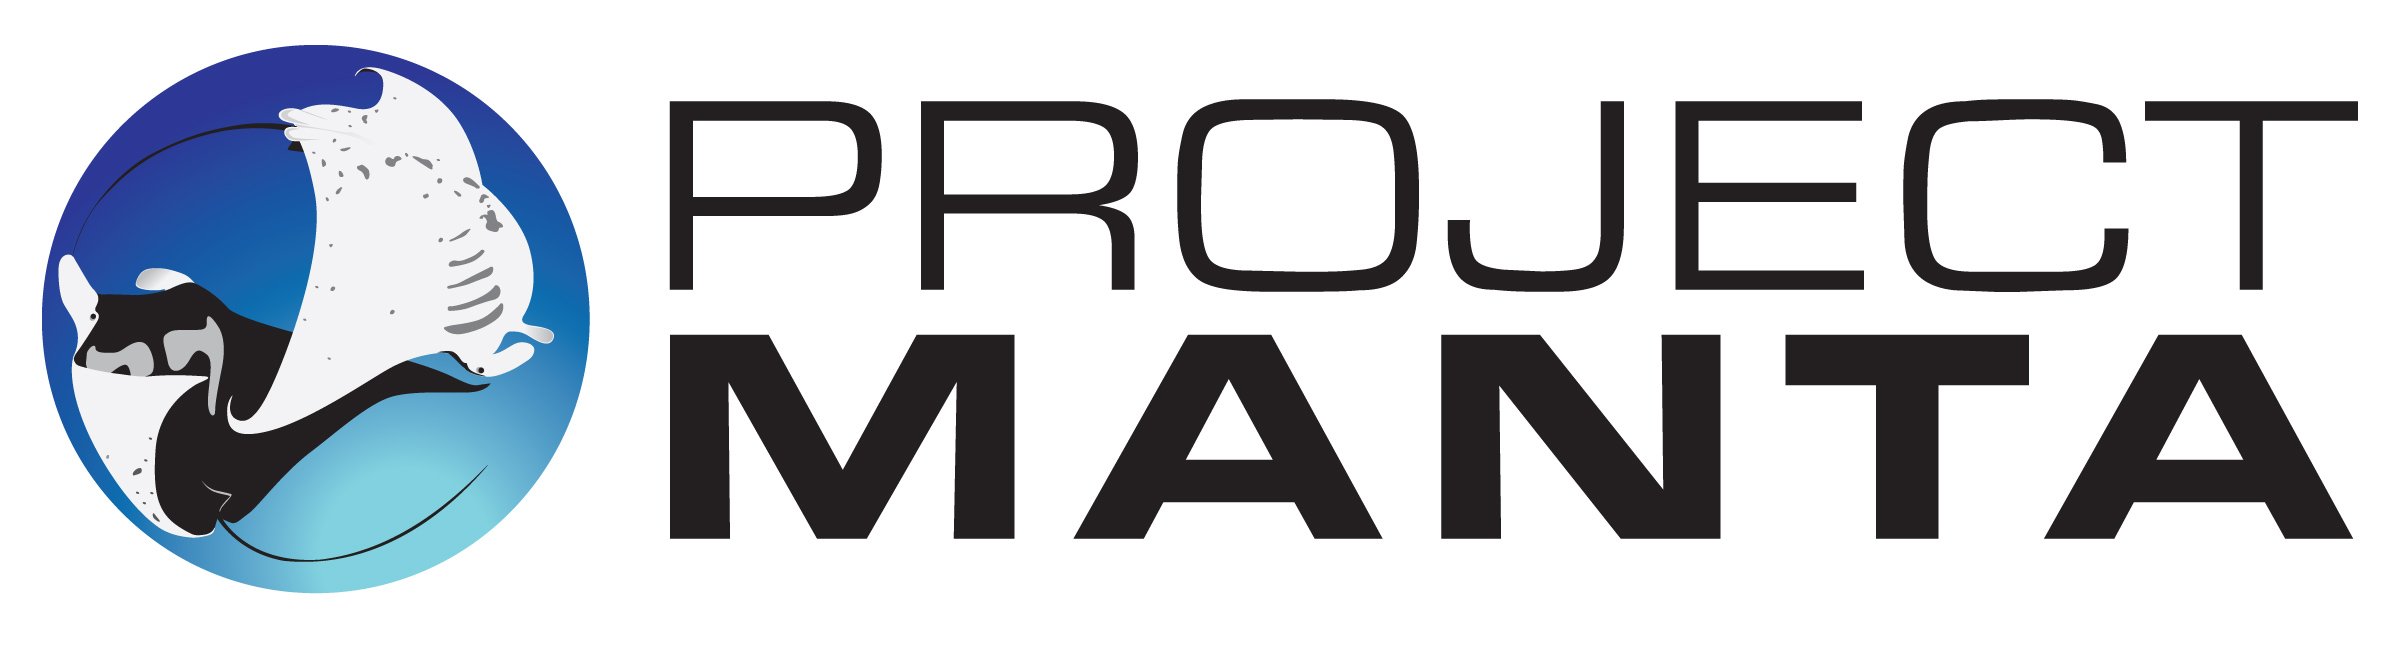 Project-Manta-Logo-CMYK-Landscape.jpg